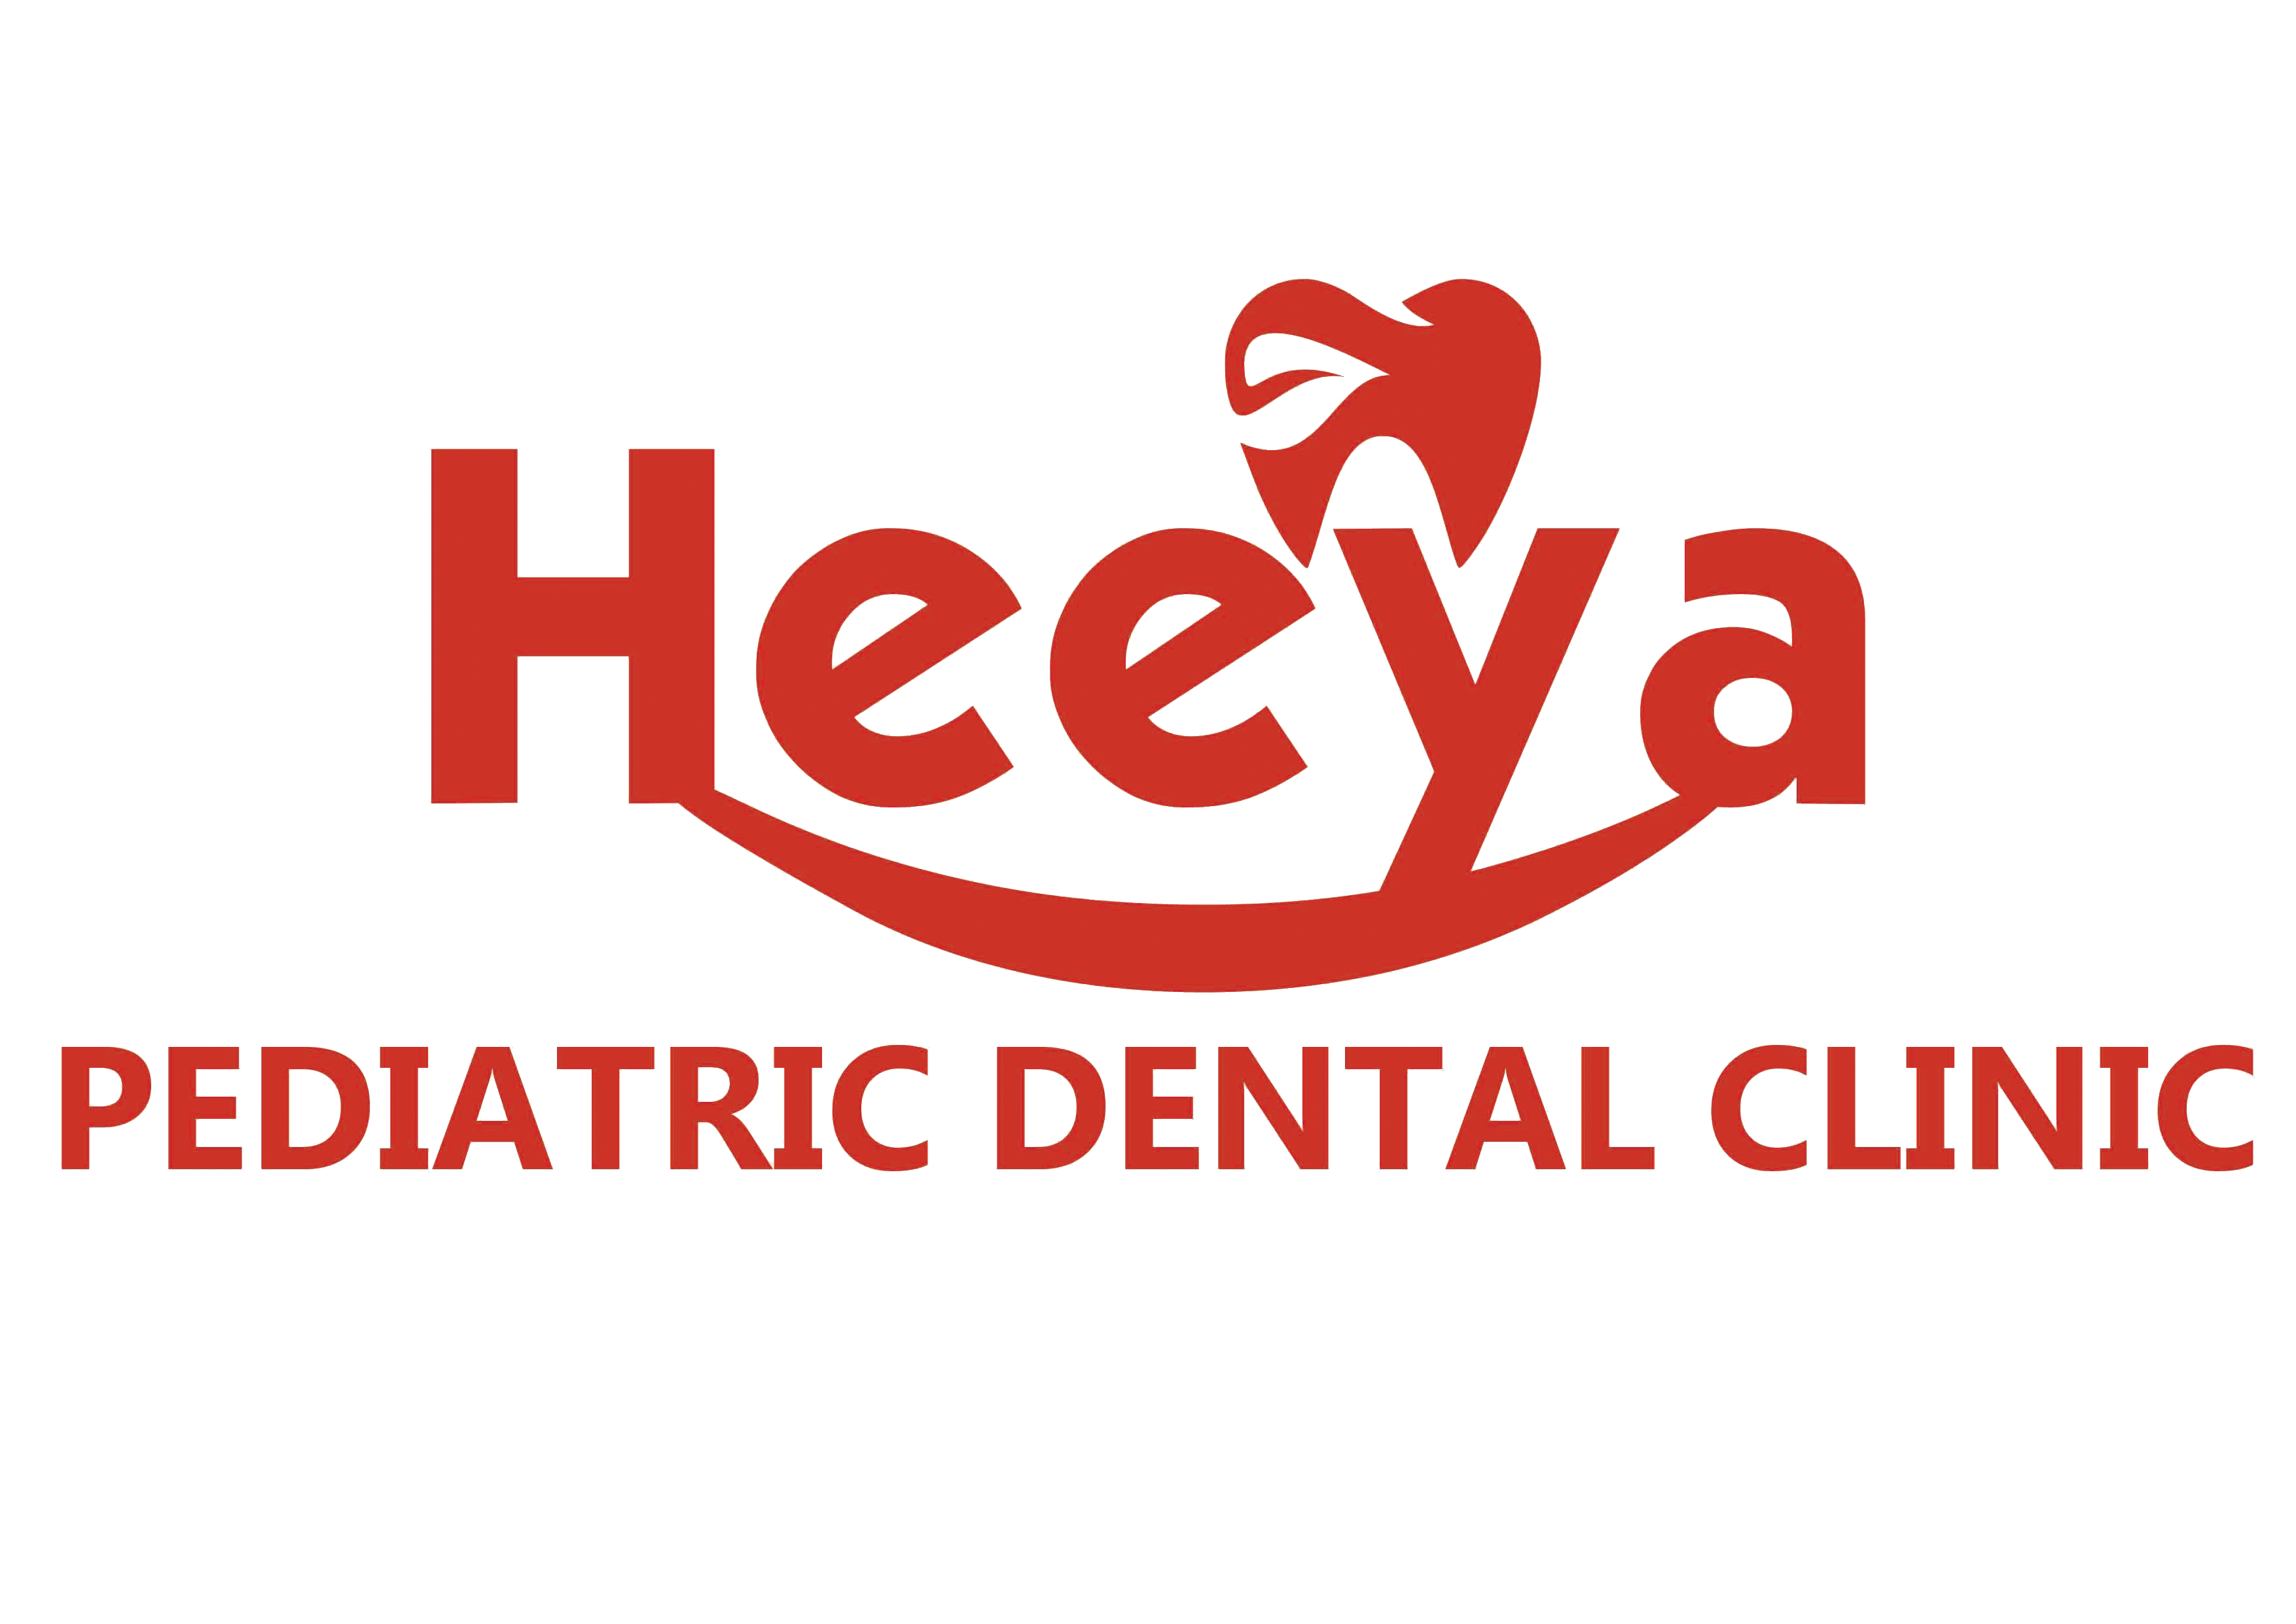 Heeya Pediatric Dental Clinic Logo